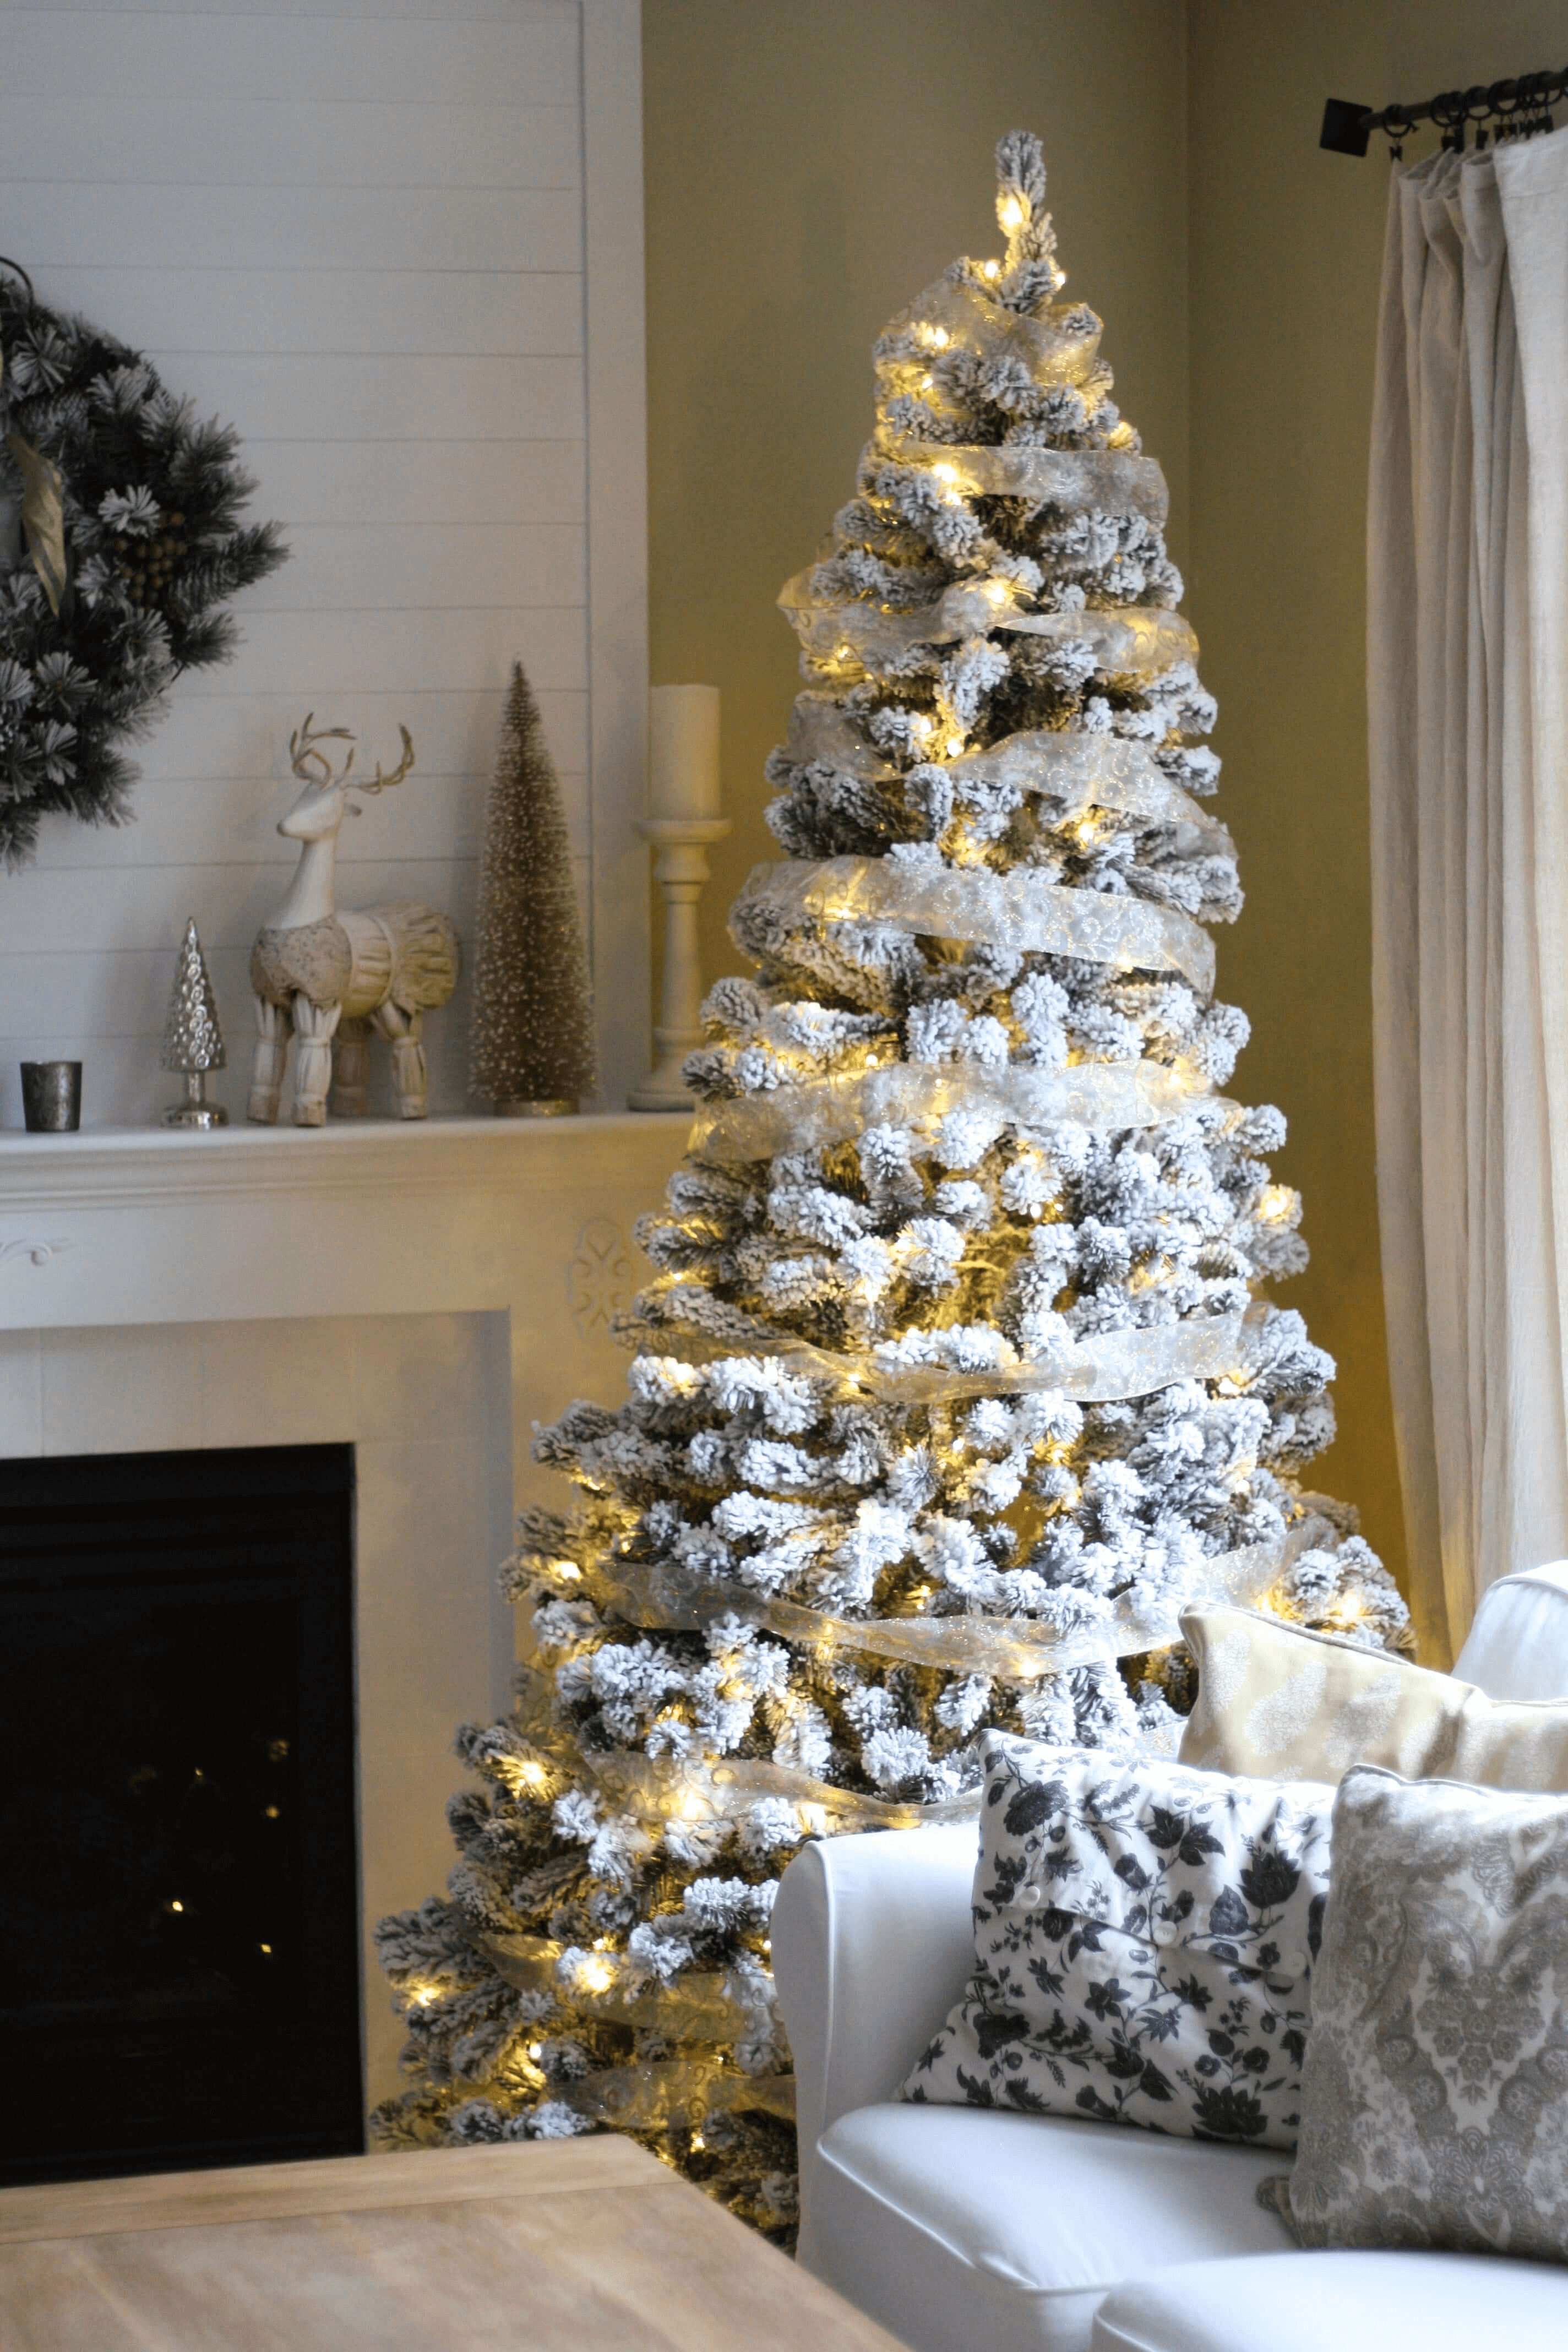 60 Feet Christmas White Tinsel Garland, White Garland for Christmas Tree, White Christmas Garland Ornament Glitter Tinsel Twist Garland for